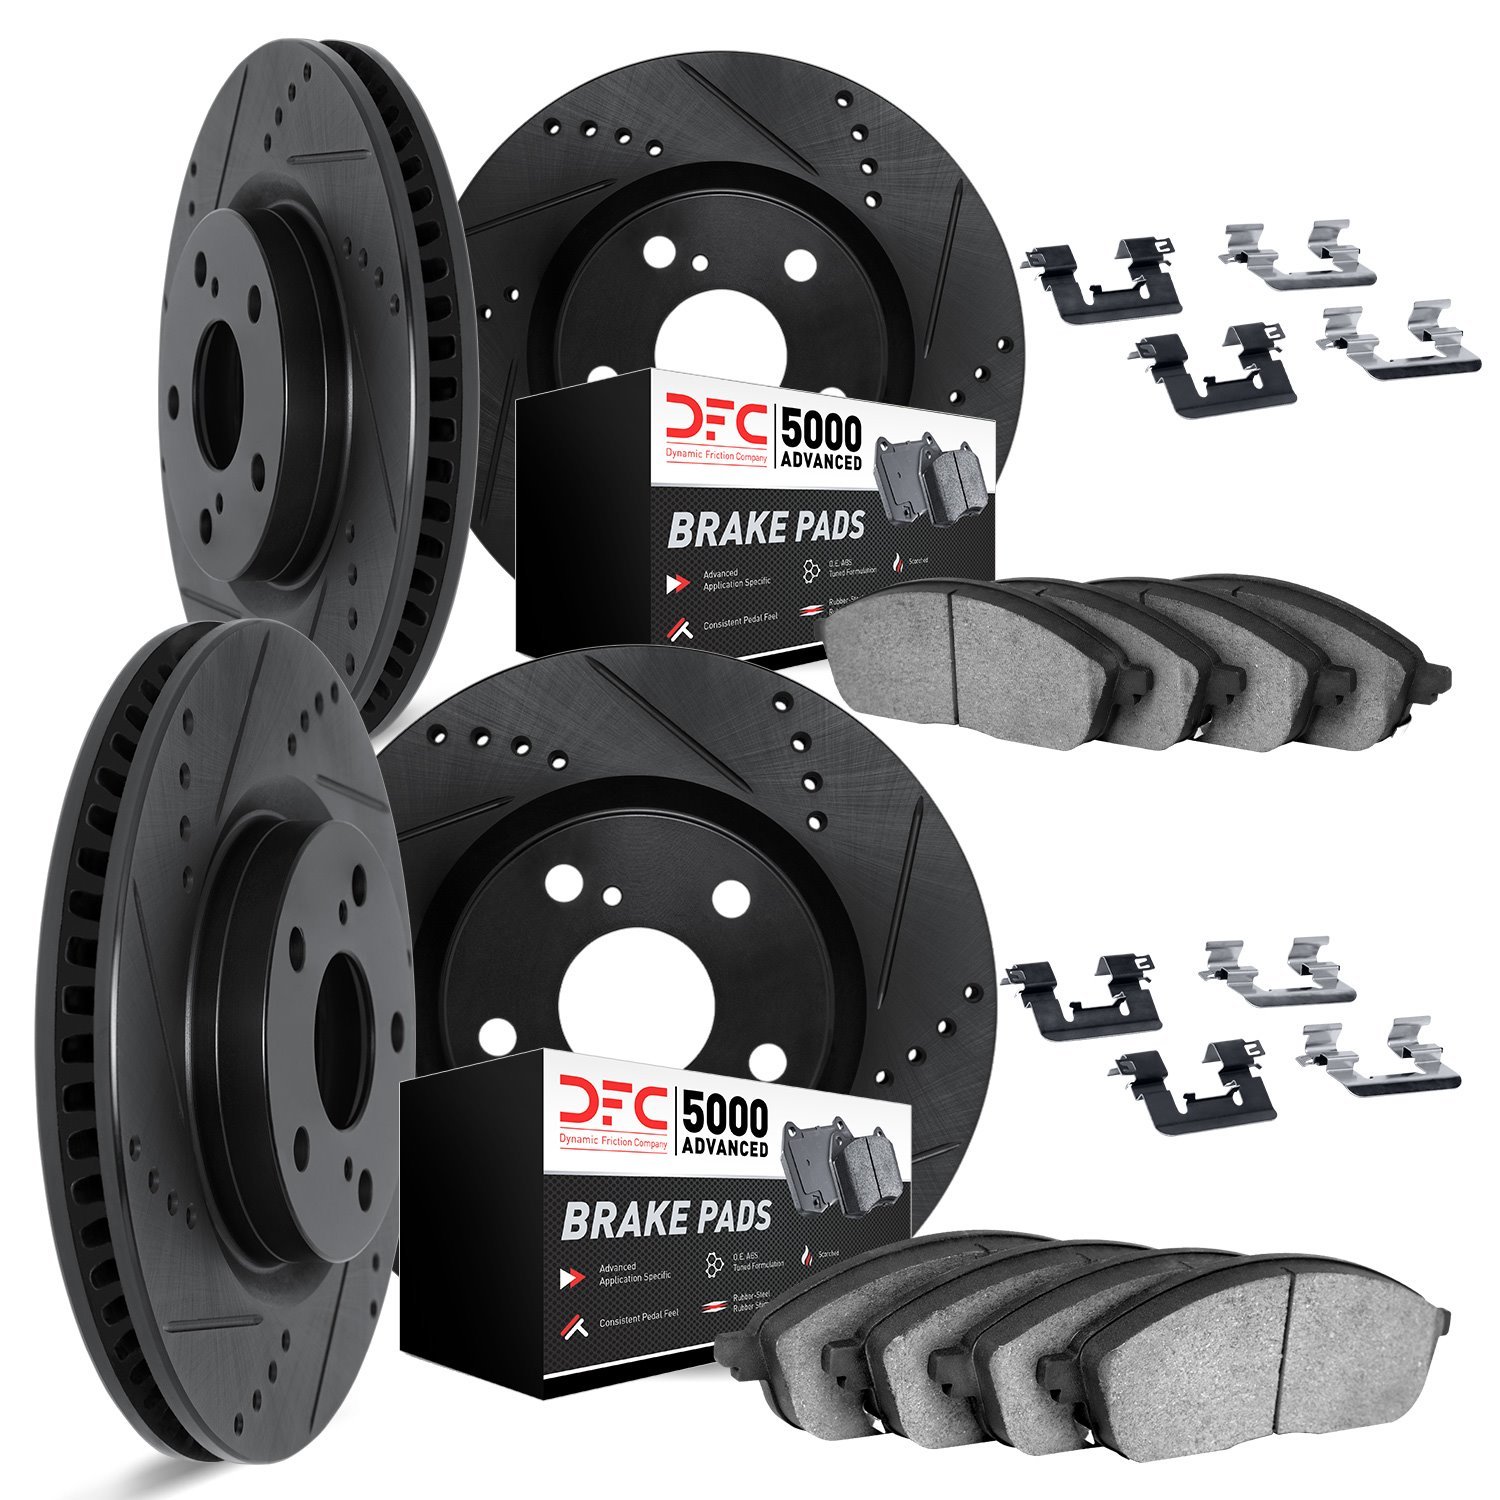 8514-39046 Drilled/Slotted Brake Rotors w/5000 Advanced Brake Pads Kit & Hardware [Black], 2005-2020 Mopar, Position: Front and